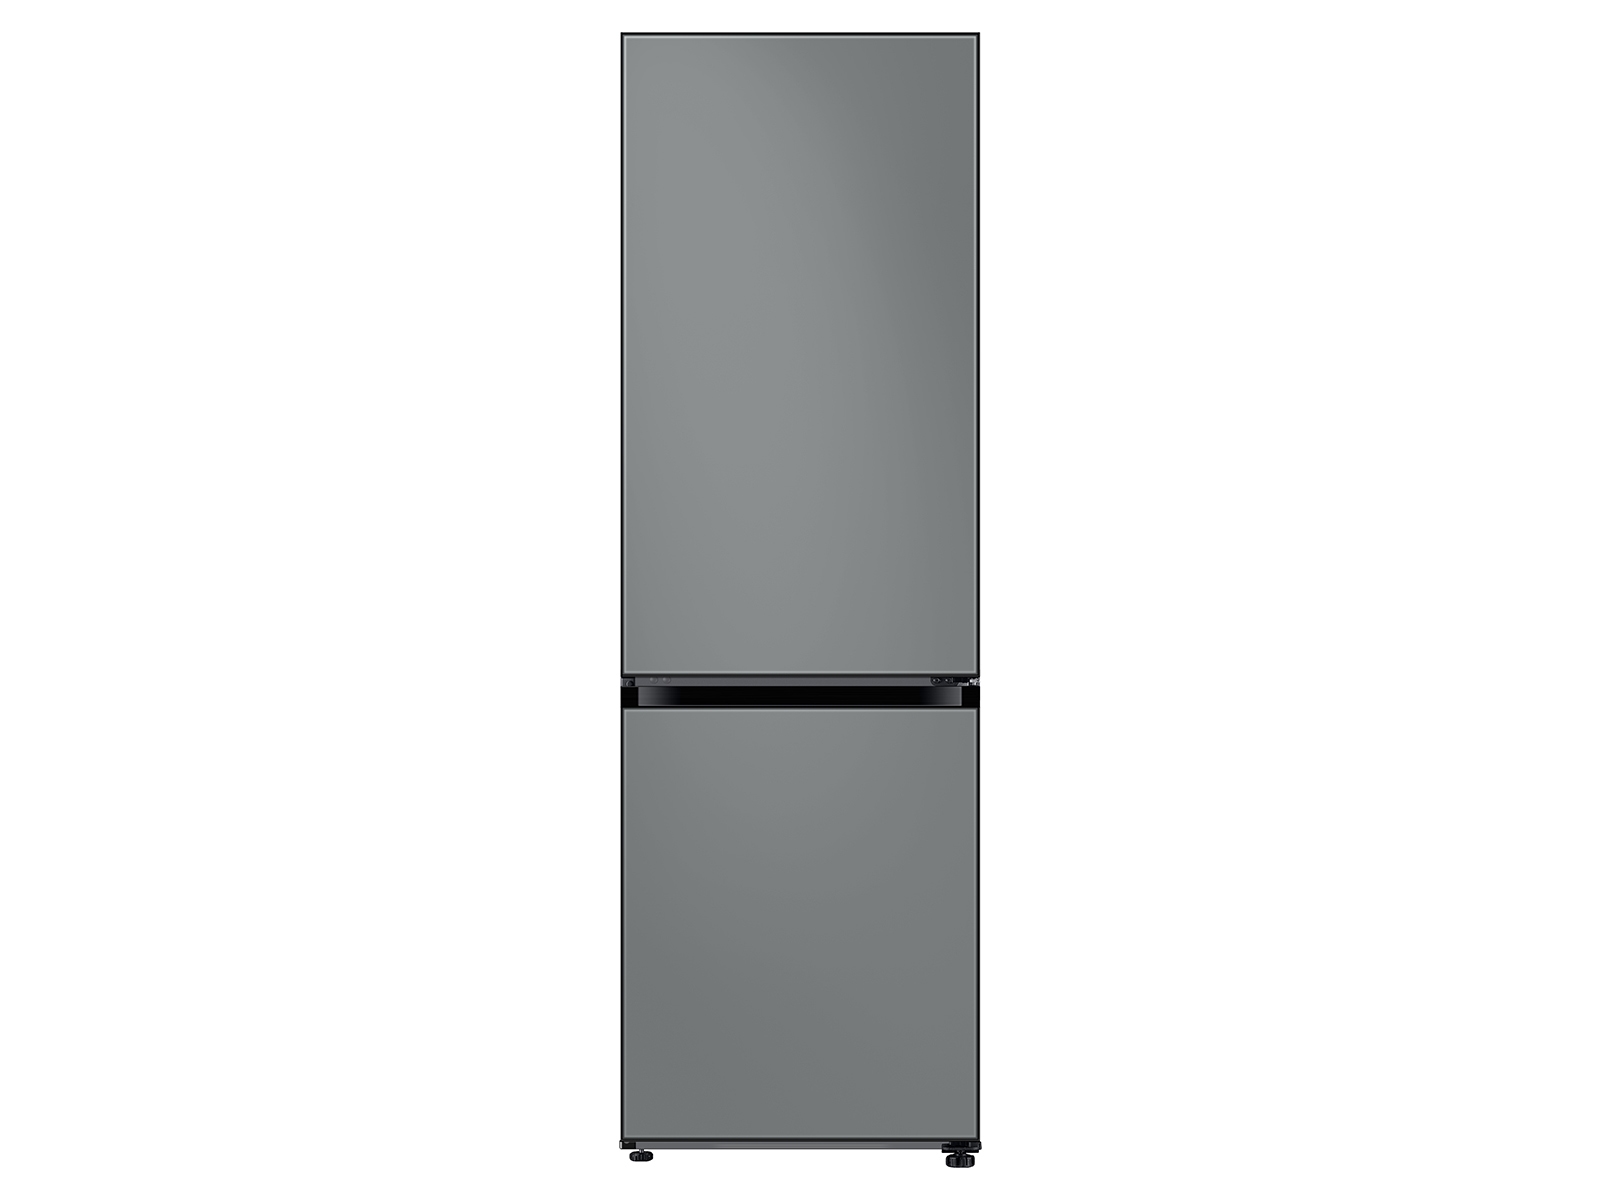 Samsung 12.0 cu. Ft. Bespoke Bottom Freezer Refrigerator with Flexible Design in Grey Glass(RB12A300631/AA)